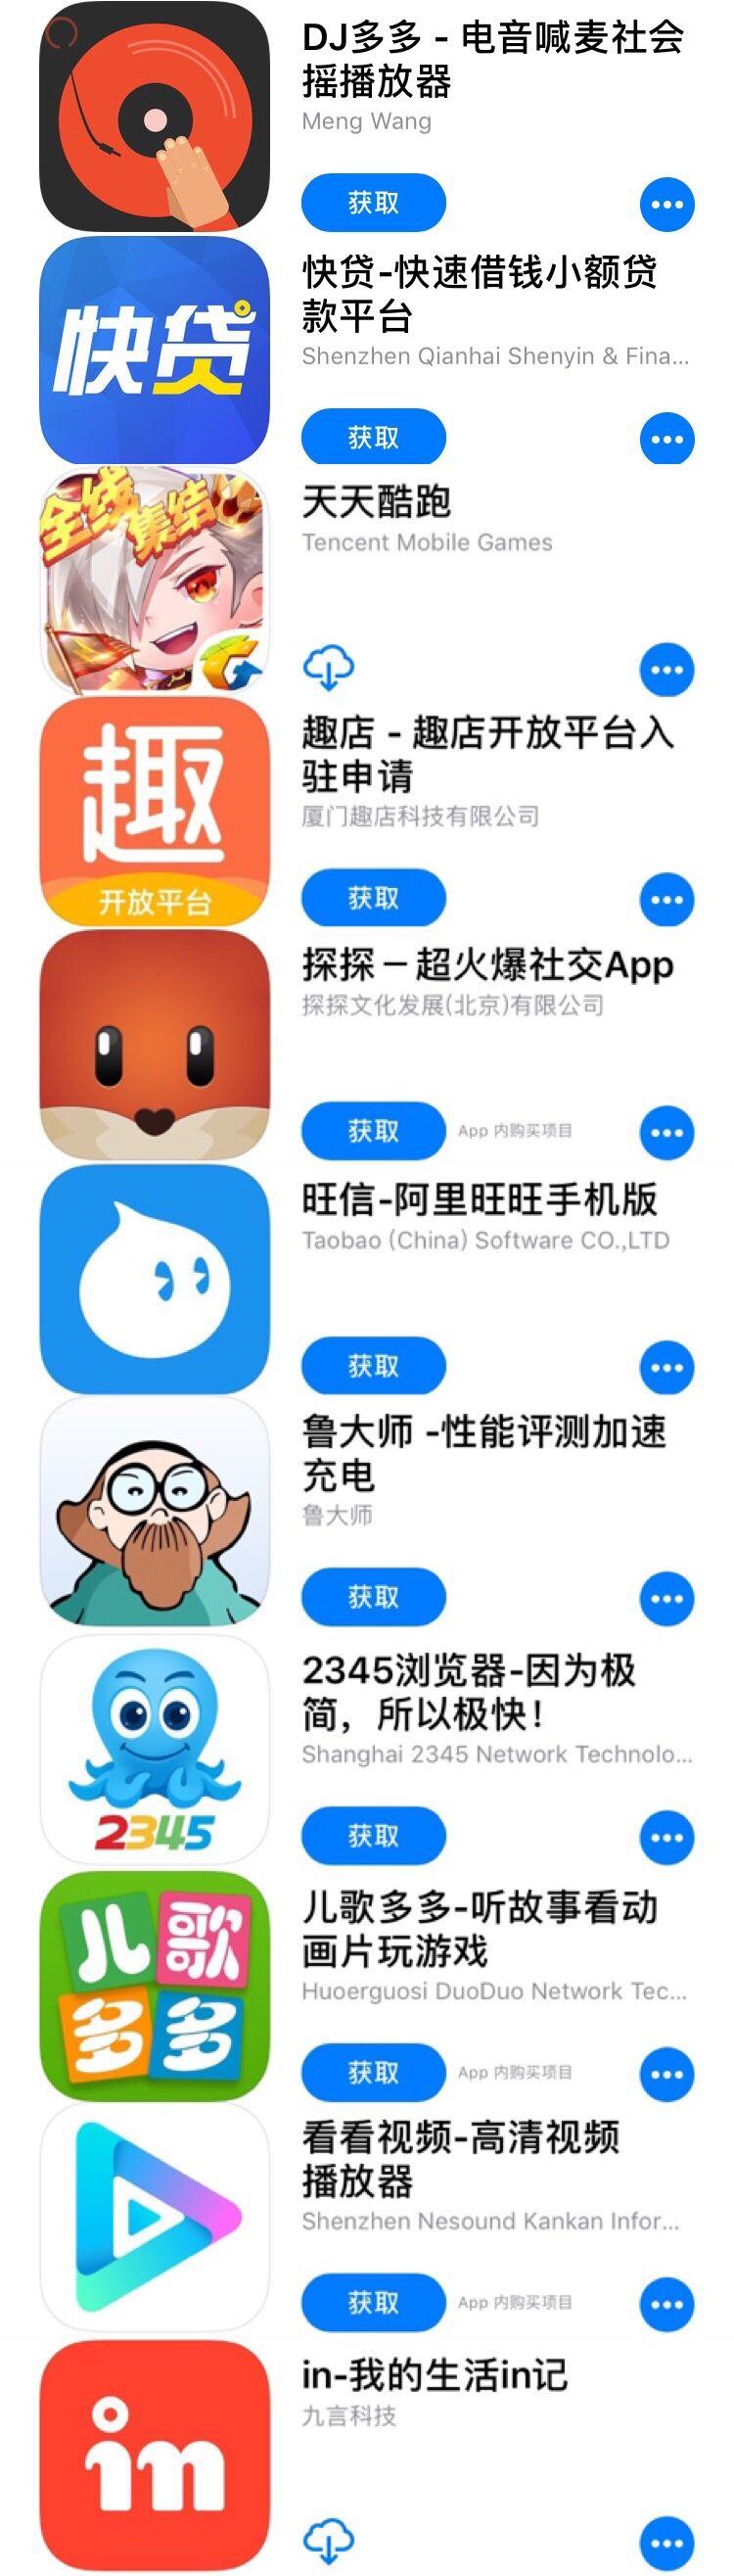 Illegal! 30 Apps Filch User's Secret, including Chinese Tinder!